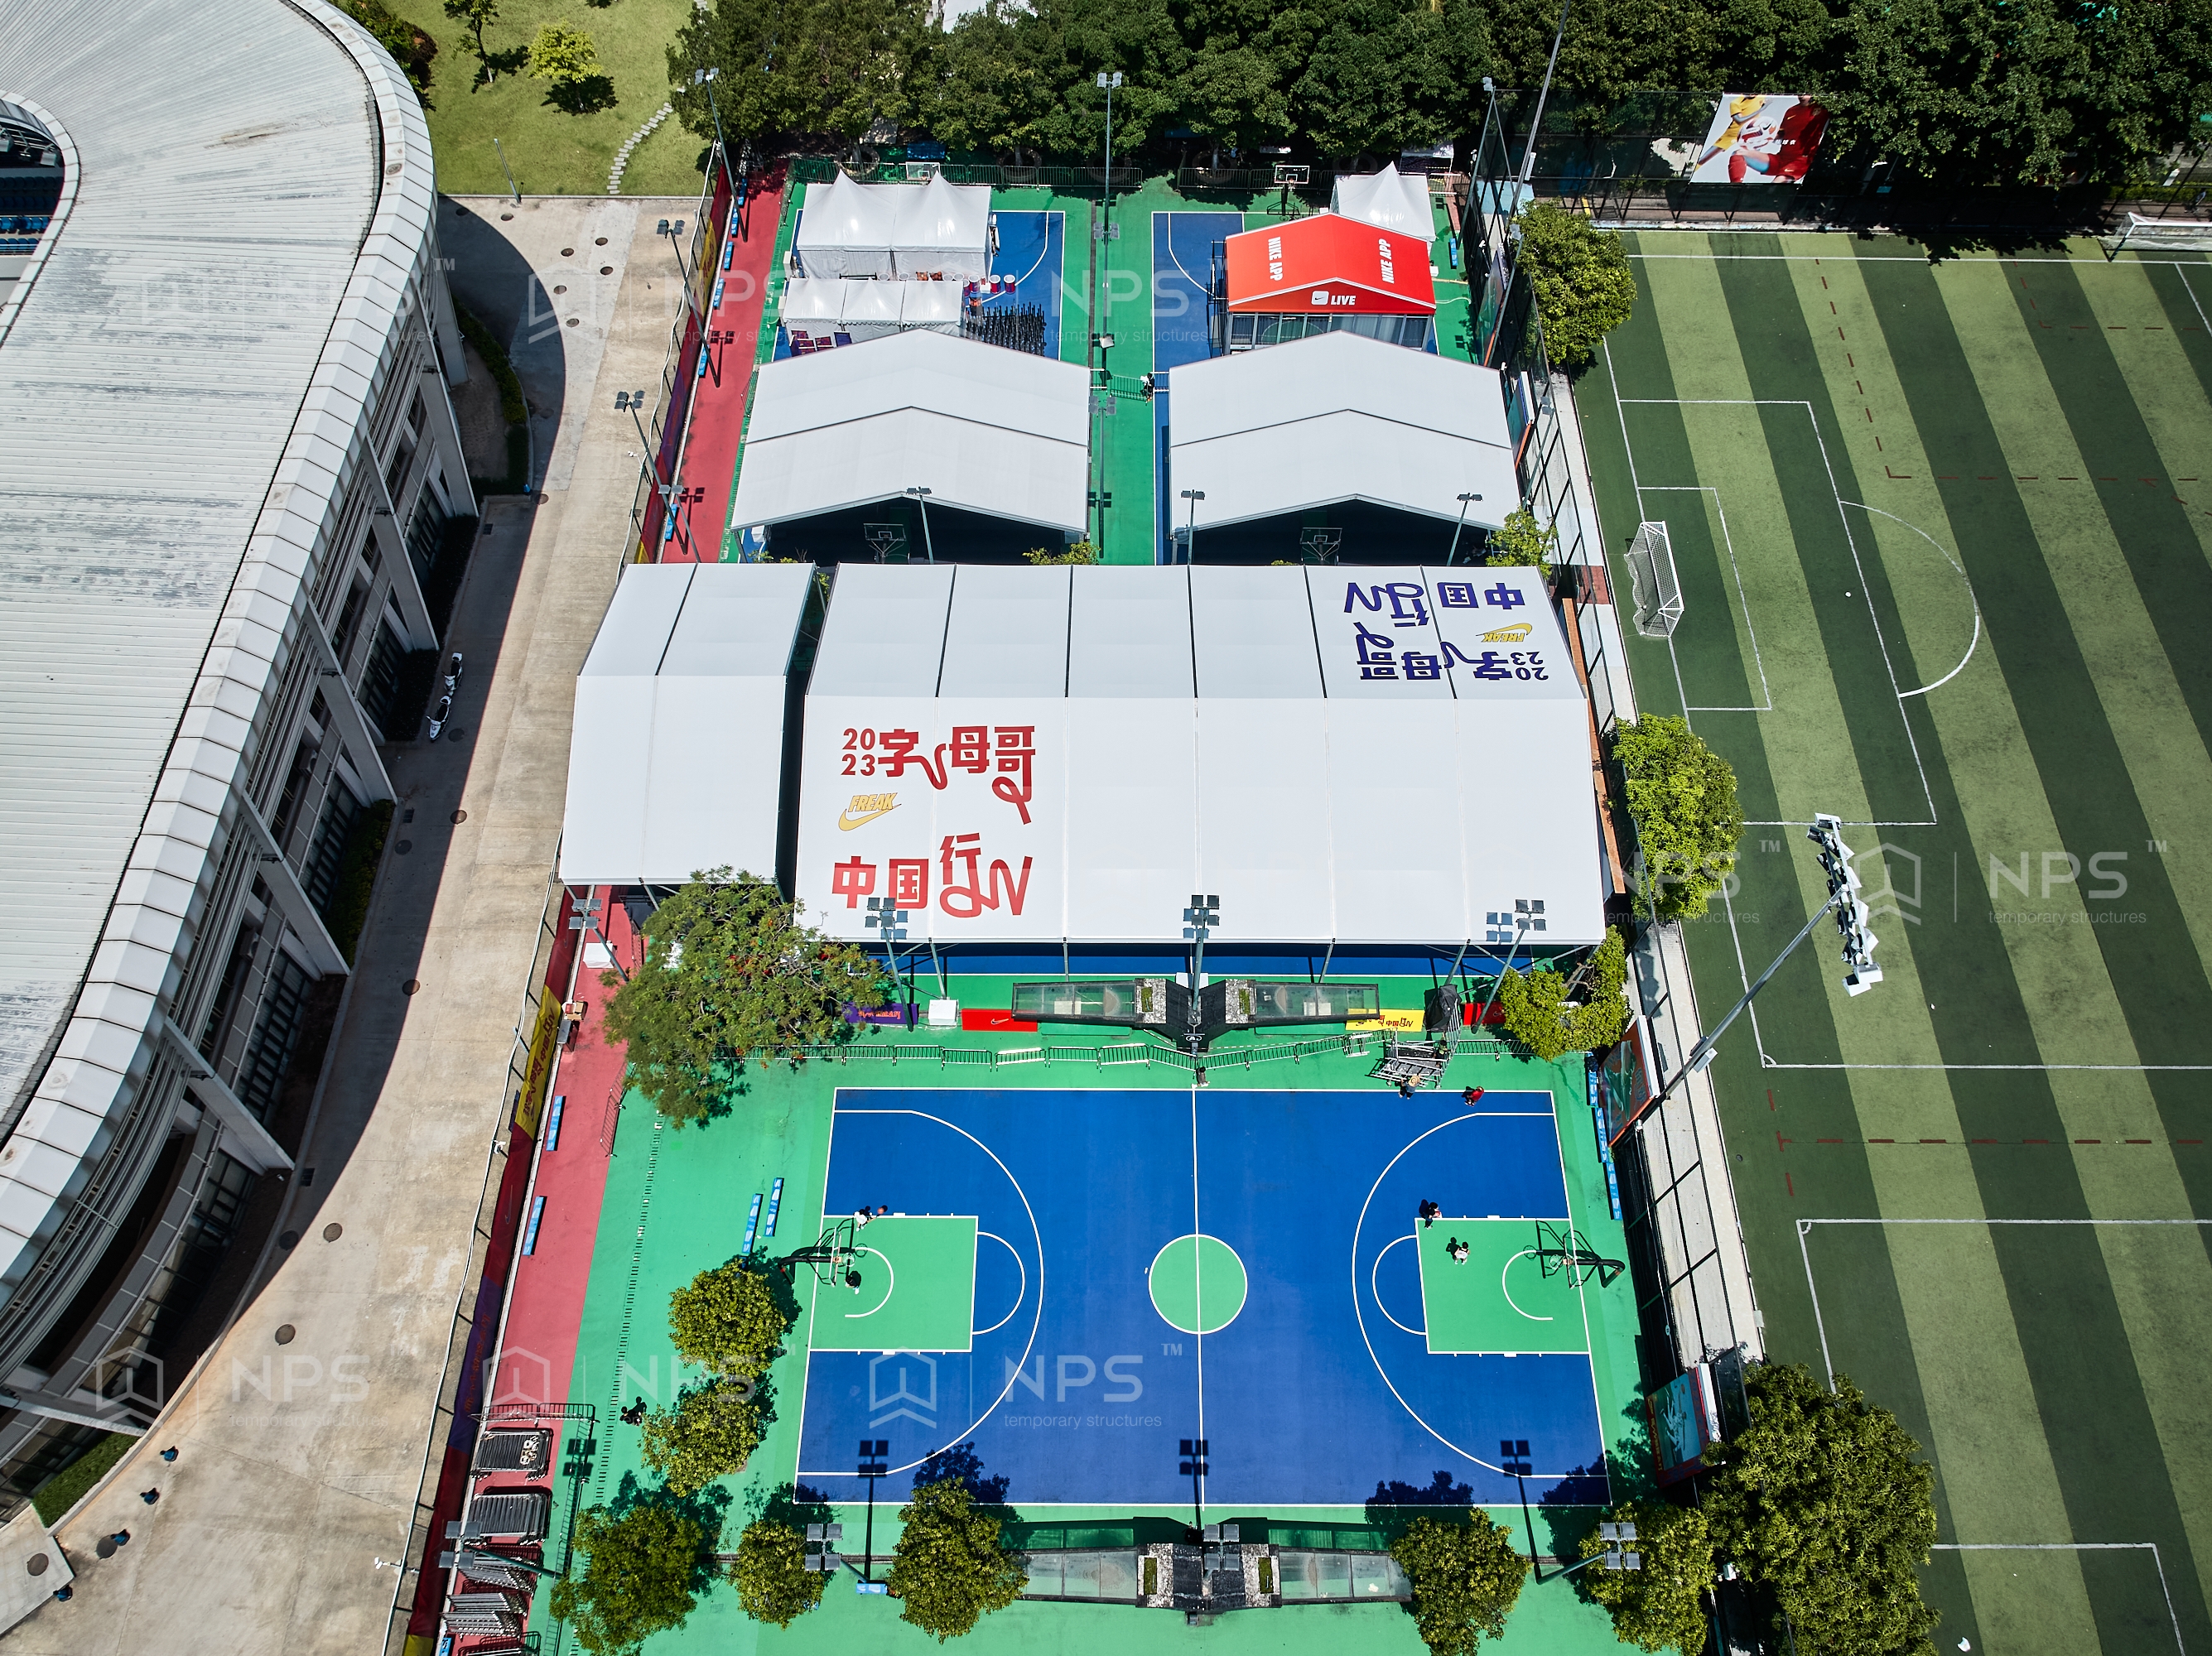 2023NBA字母哥中国行，NPS奈柏可移动建筑为其提供高品质体育篷房-都市魅力网